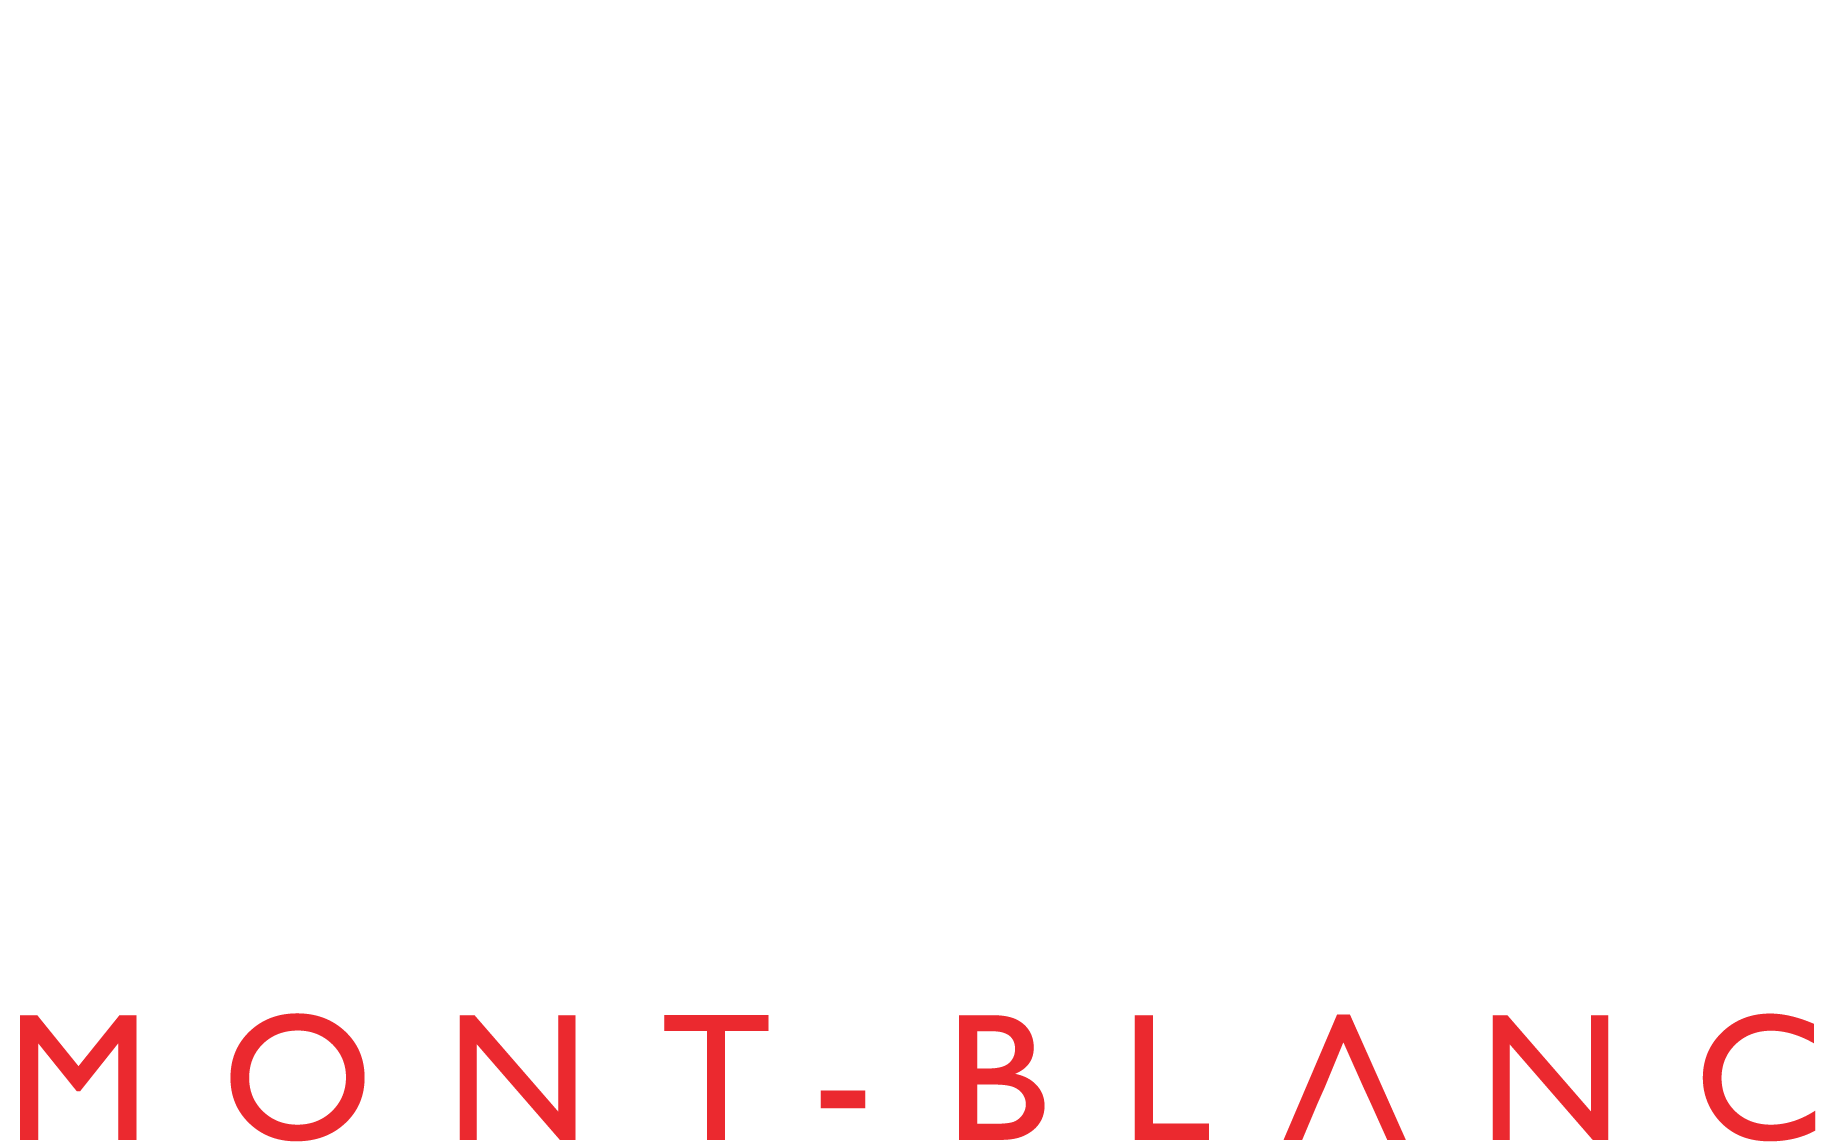 CrossfitMB logo png x2